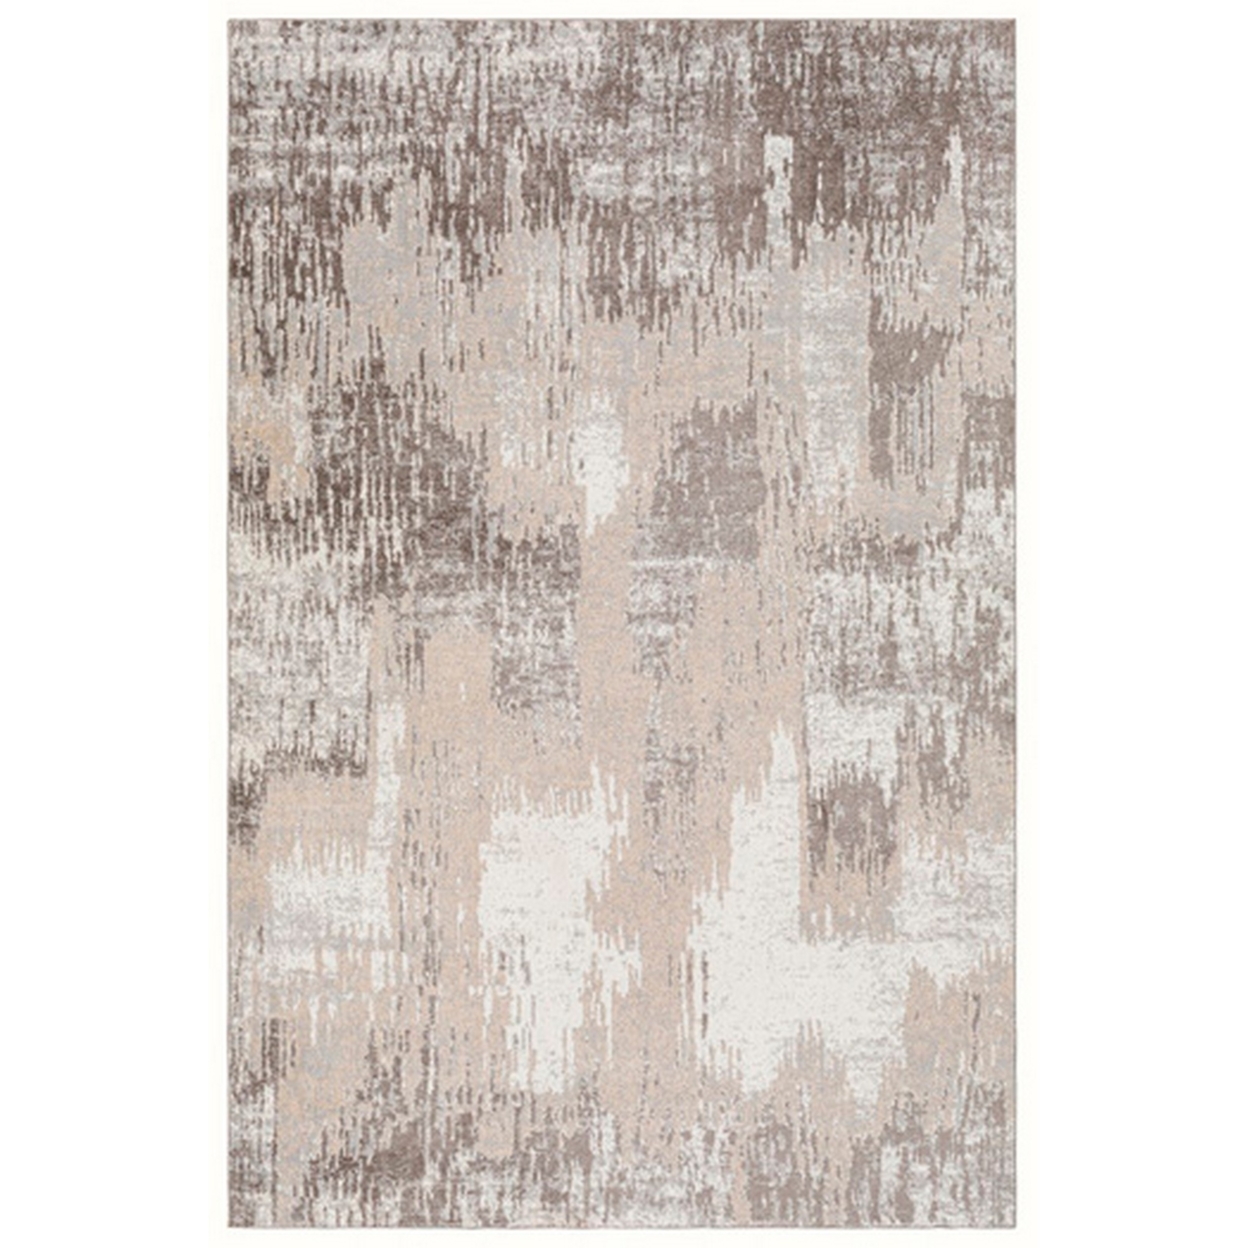 Wyn 7 X 5 Medium Soft Fabric Floor Area Rug, Washable, Abstract Pattern, Gray, Beige- Saltoro Sherpi